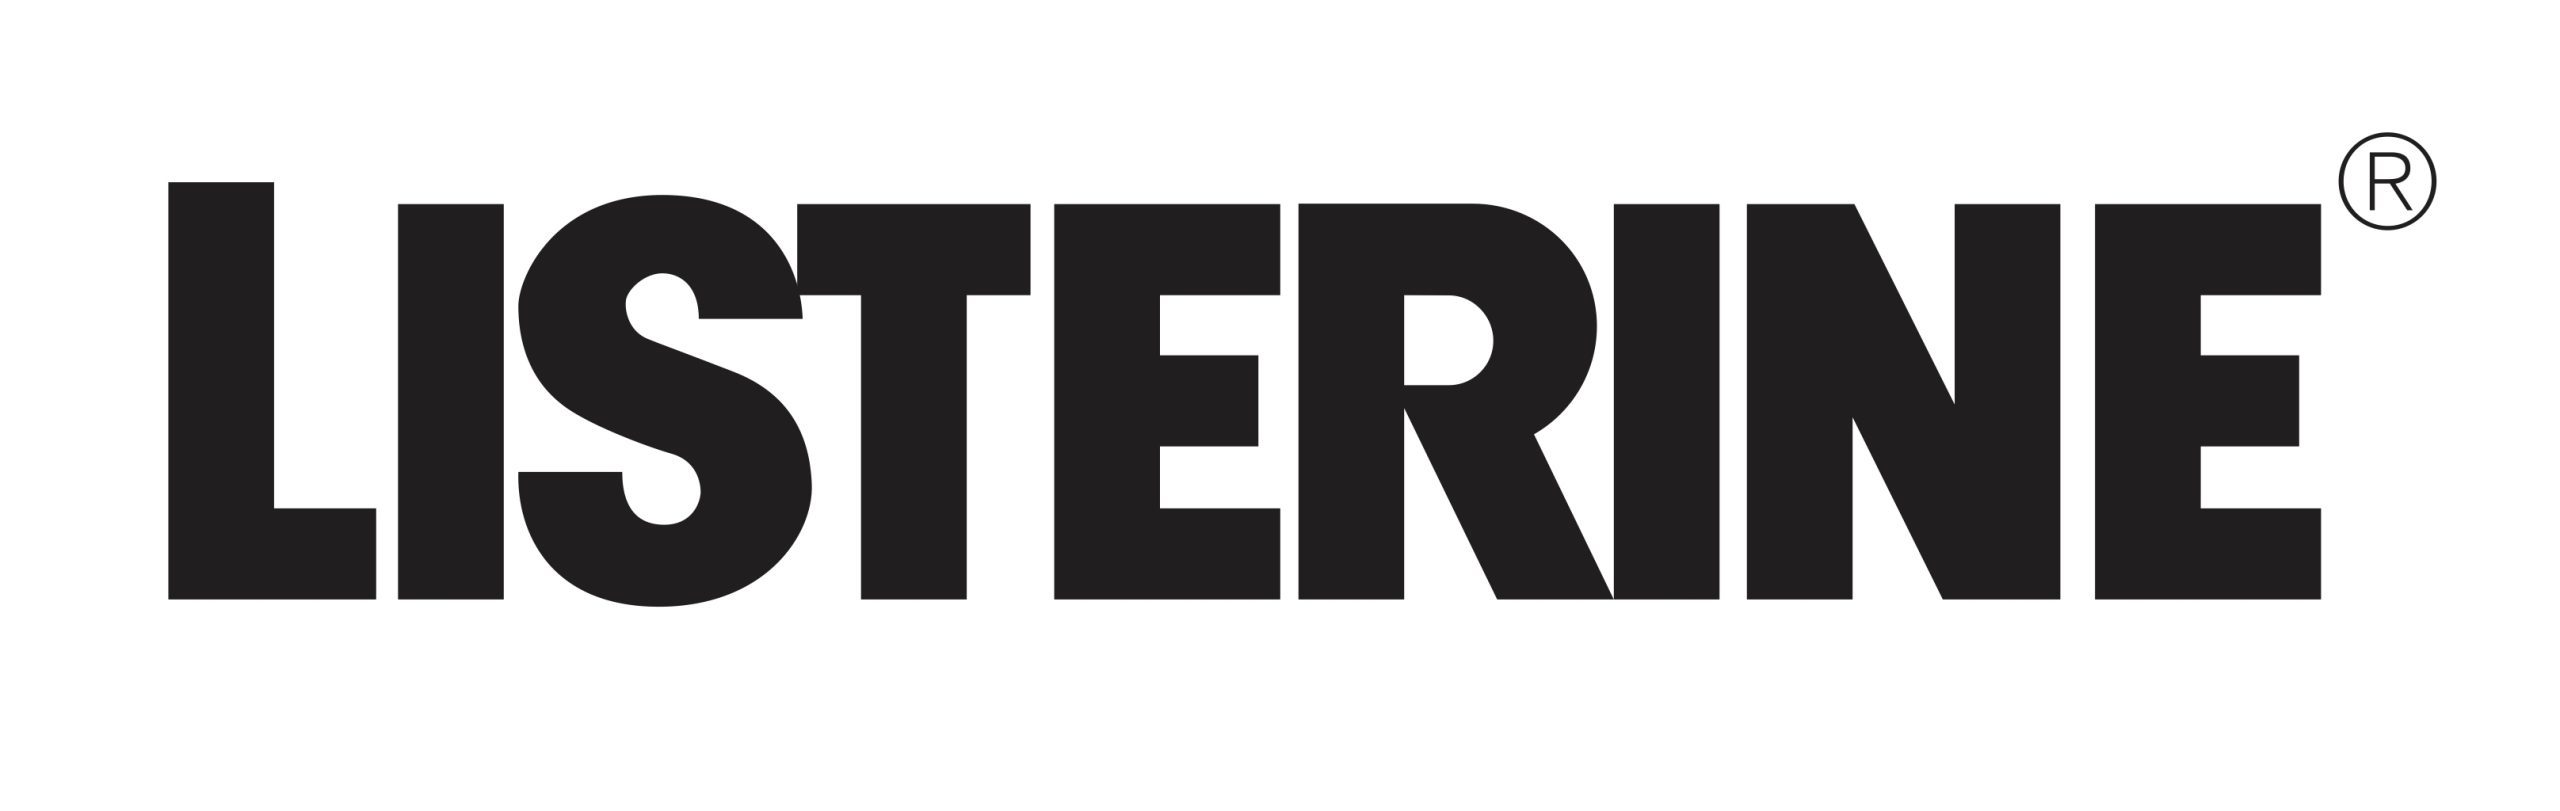 Listerine logo